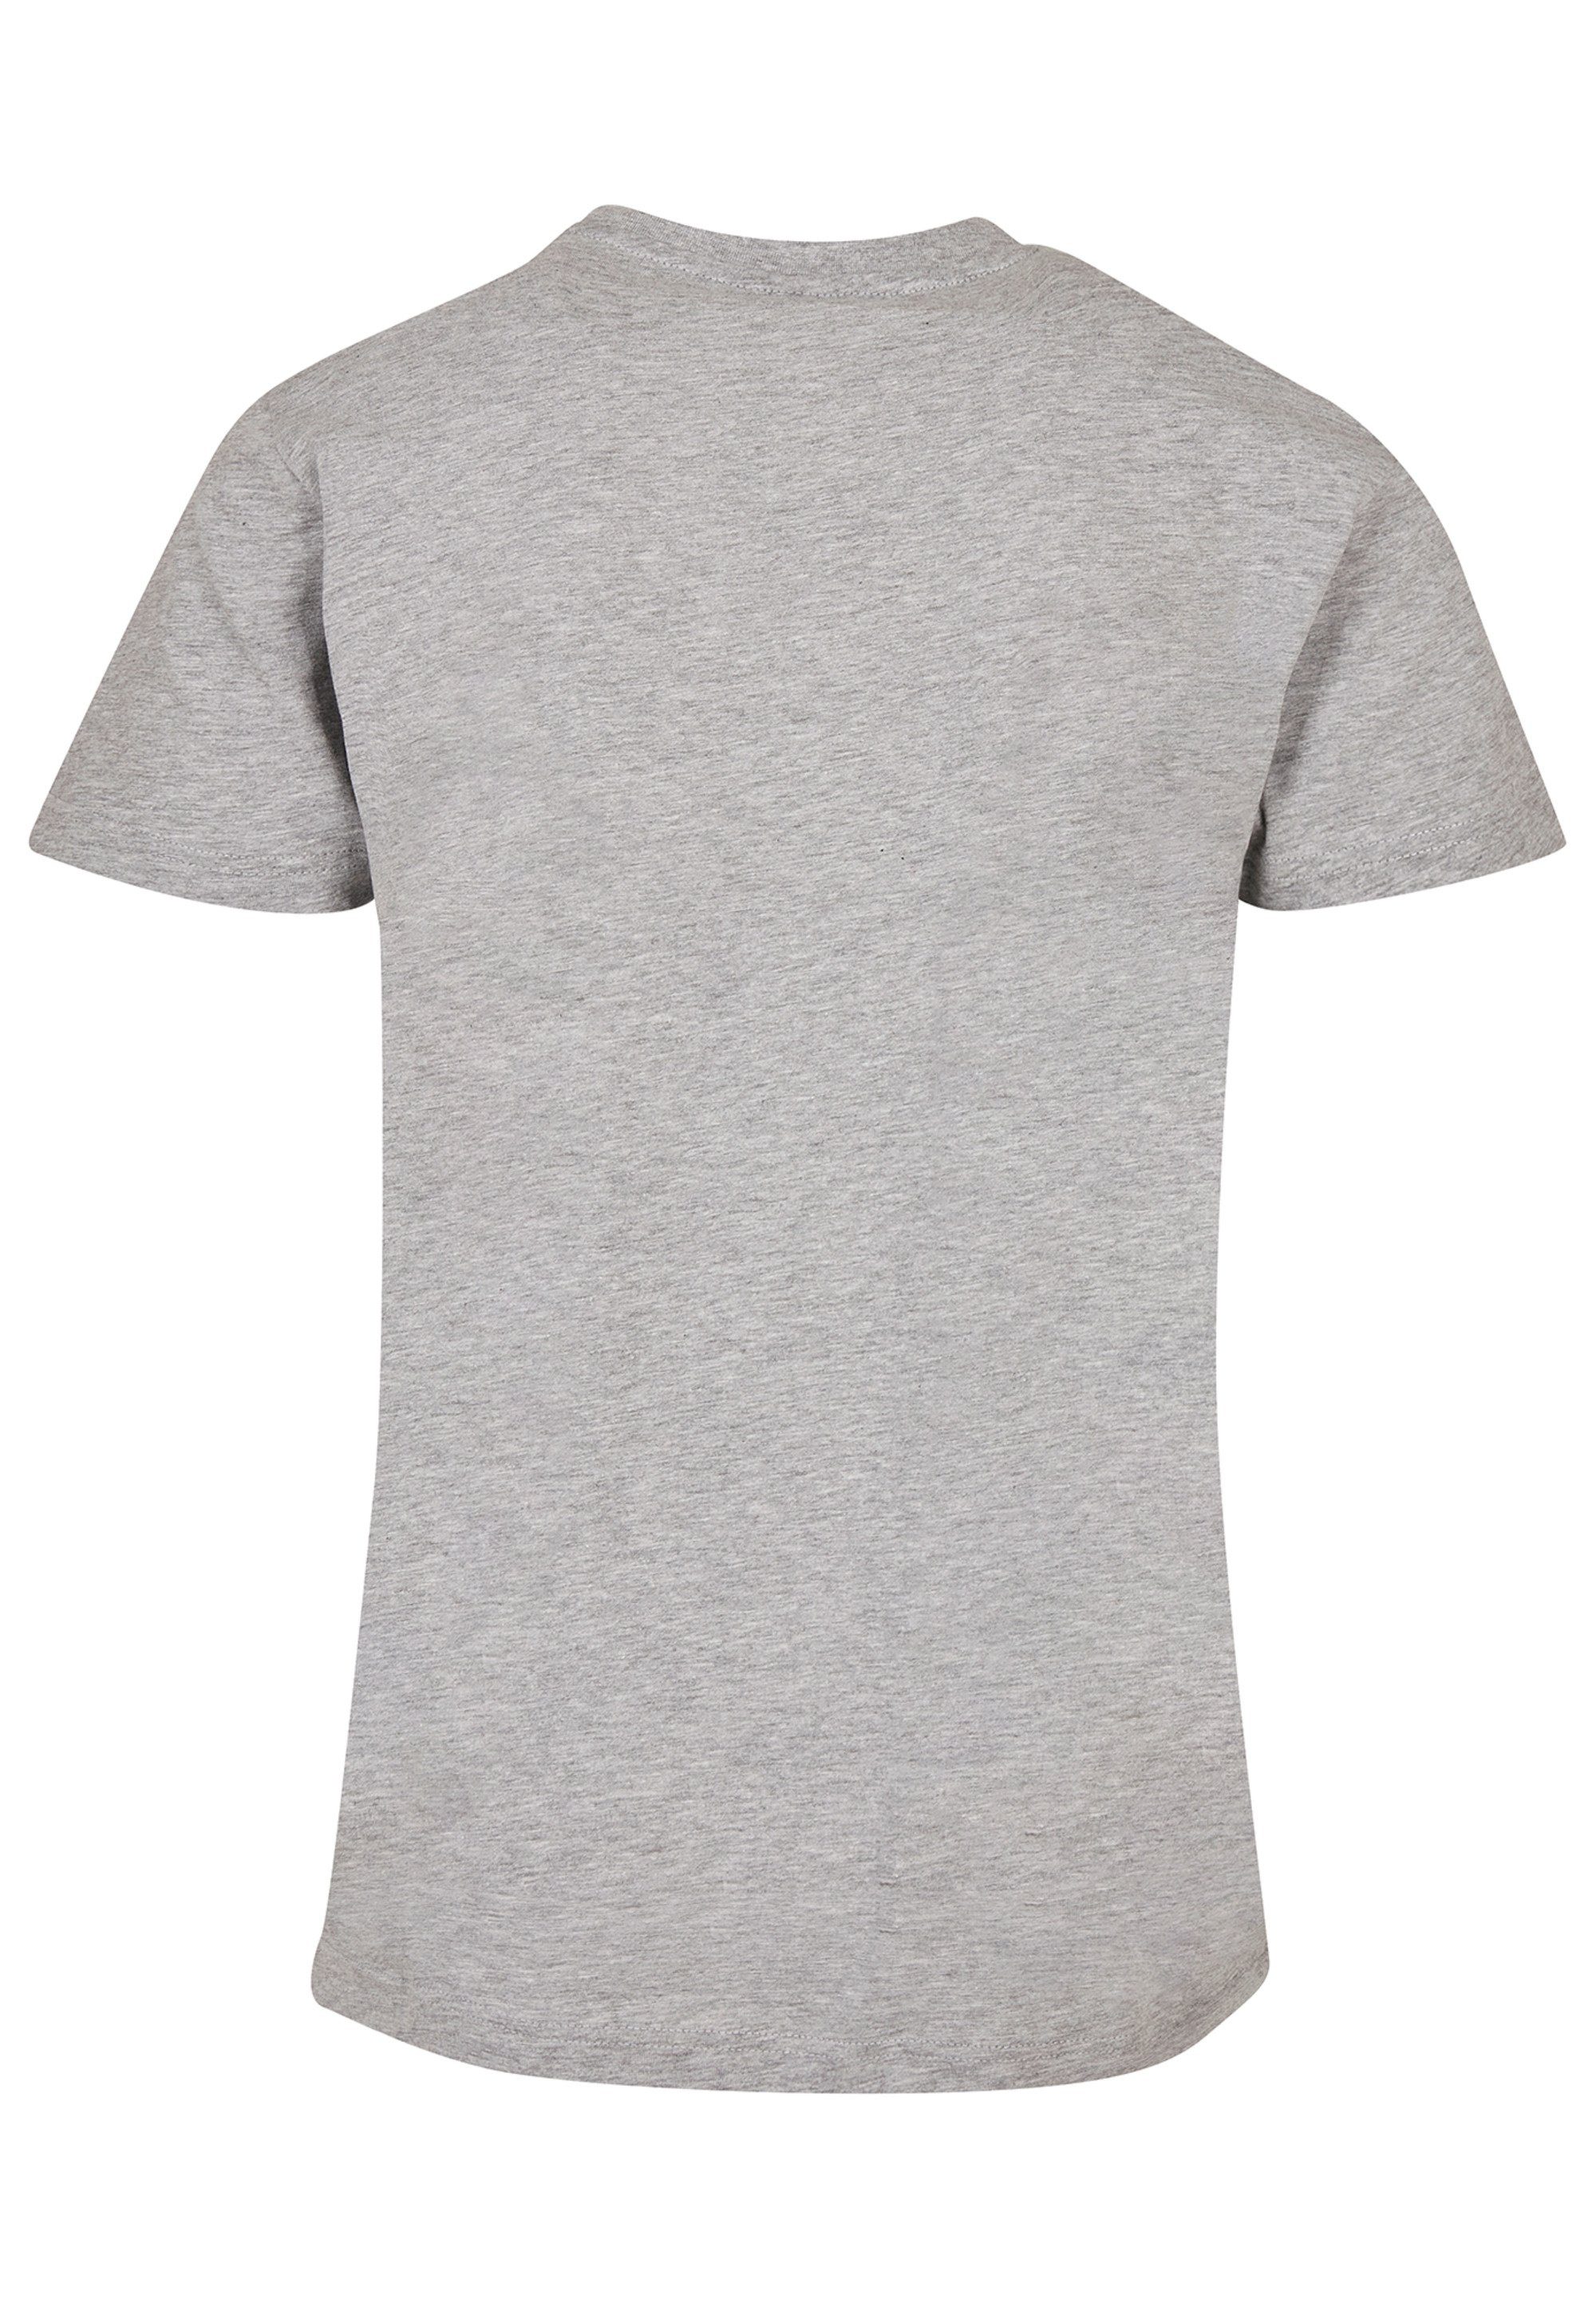 F4NT4STIC T-Shirt UNISEX Harlem grey heather Print TEE